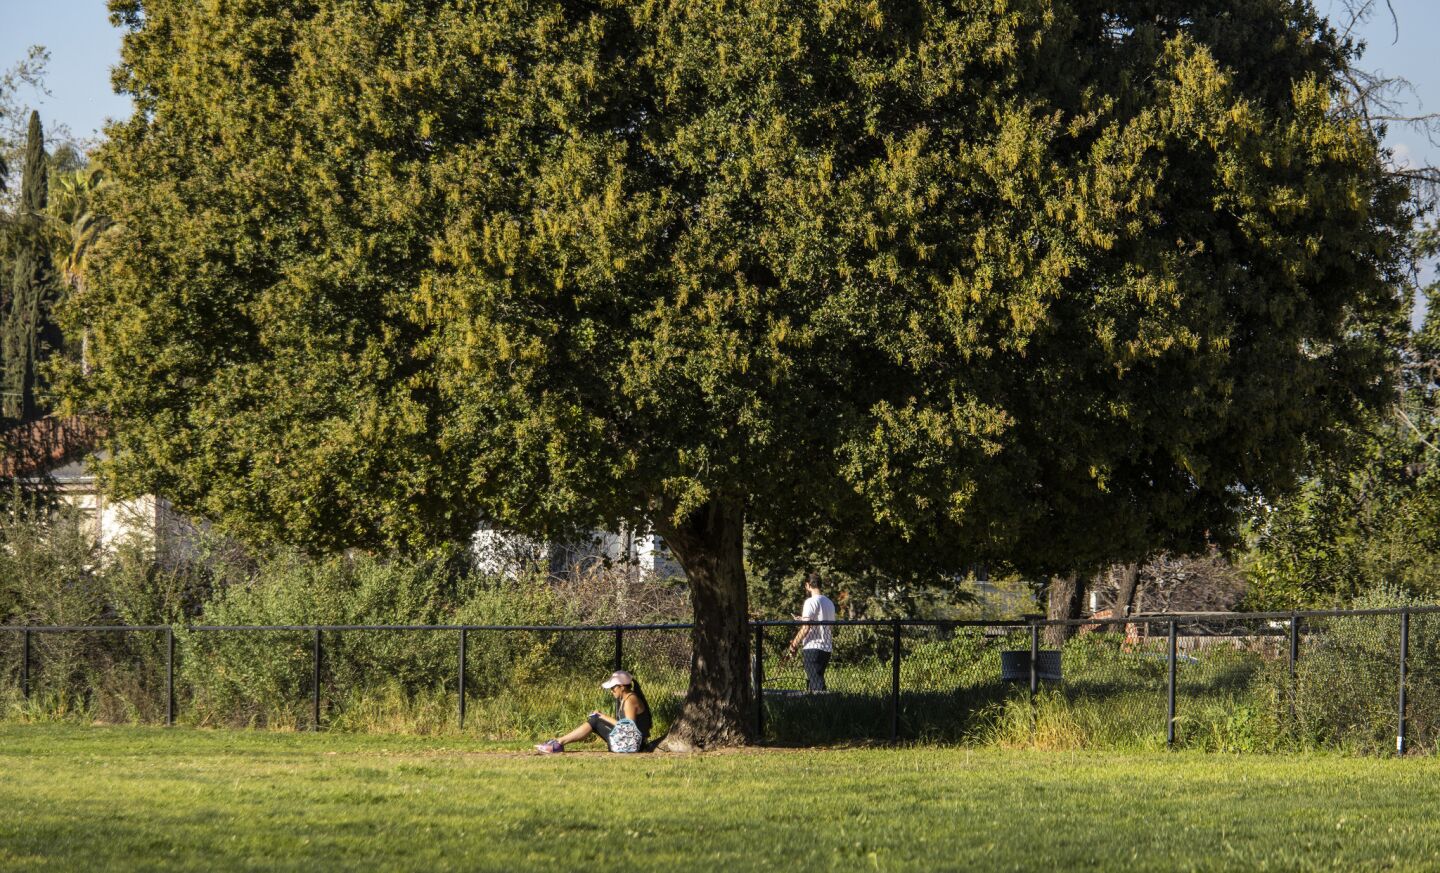 A woman reads beneath a tree near the reservoir.